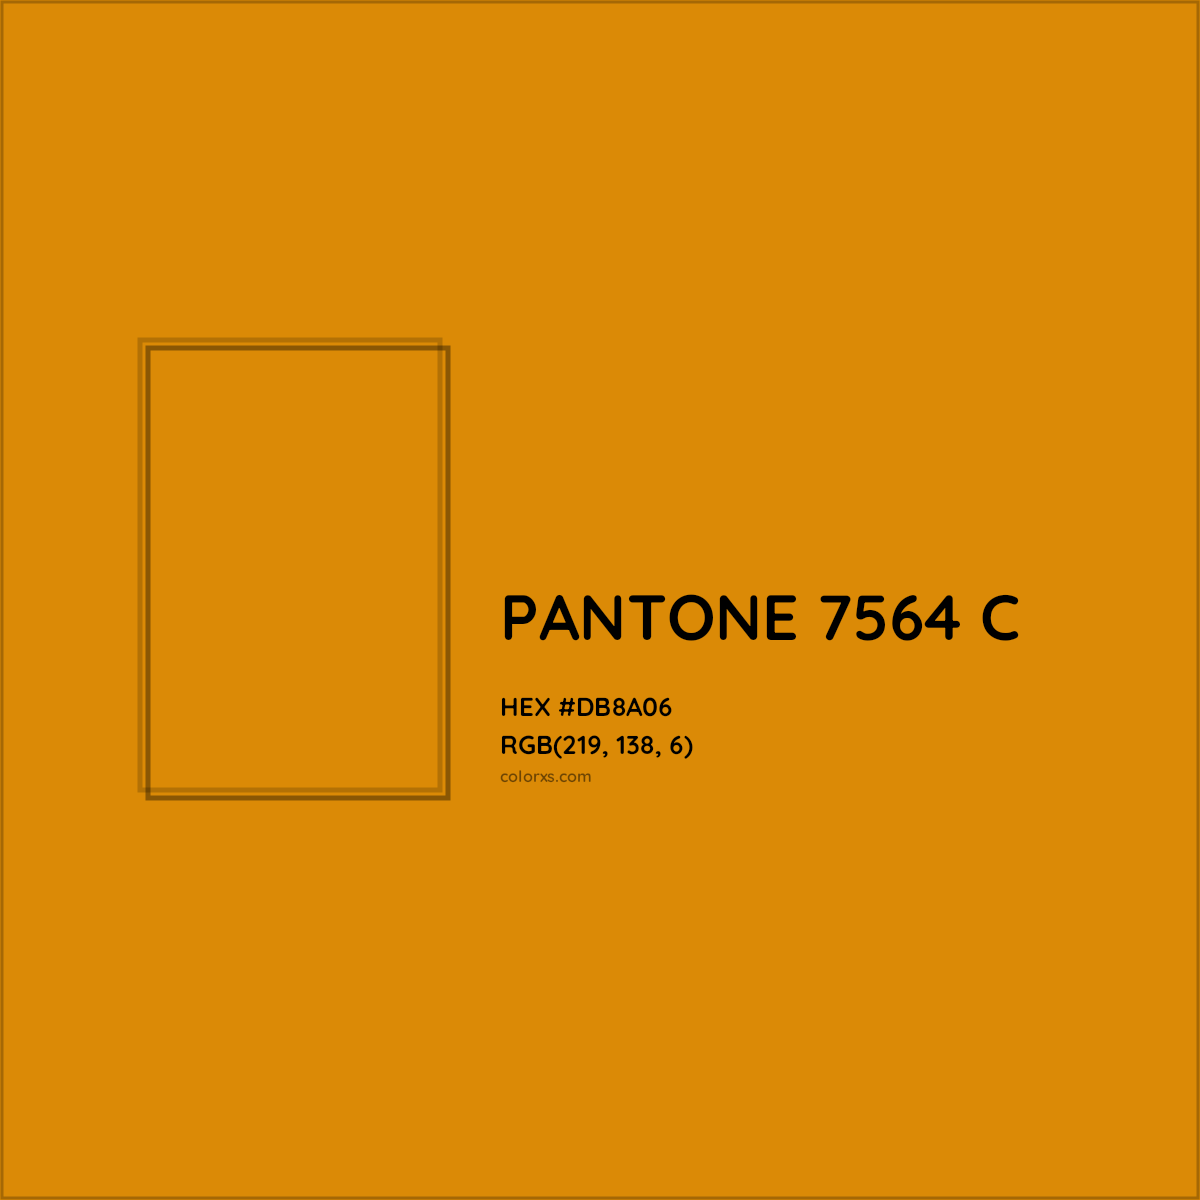 HEX #DB8A06 PANTONE 7564 C CMS Pantone PMS - Color Code